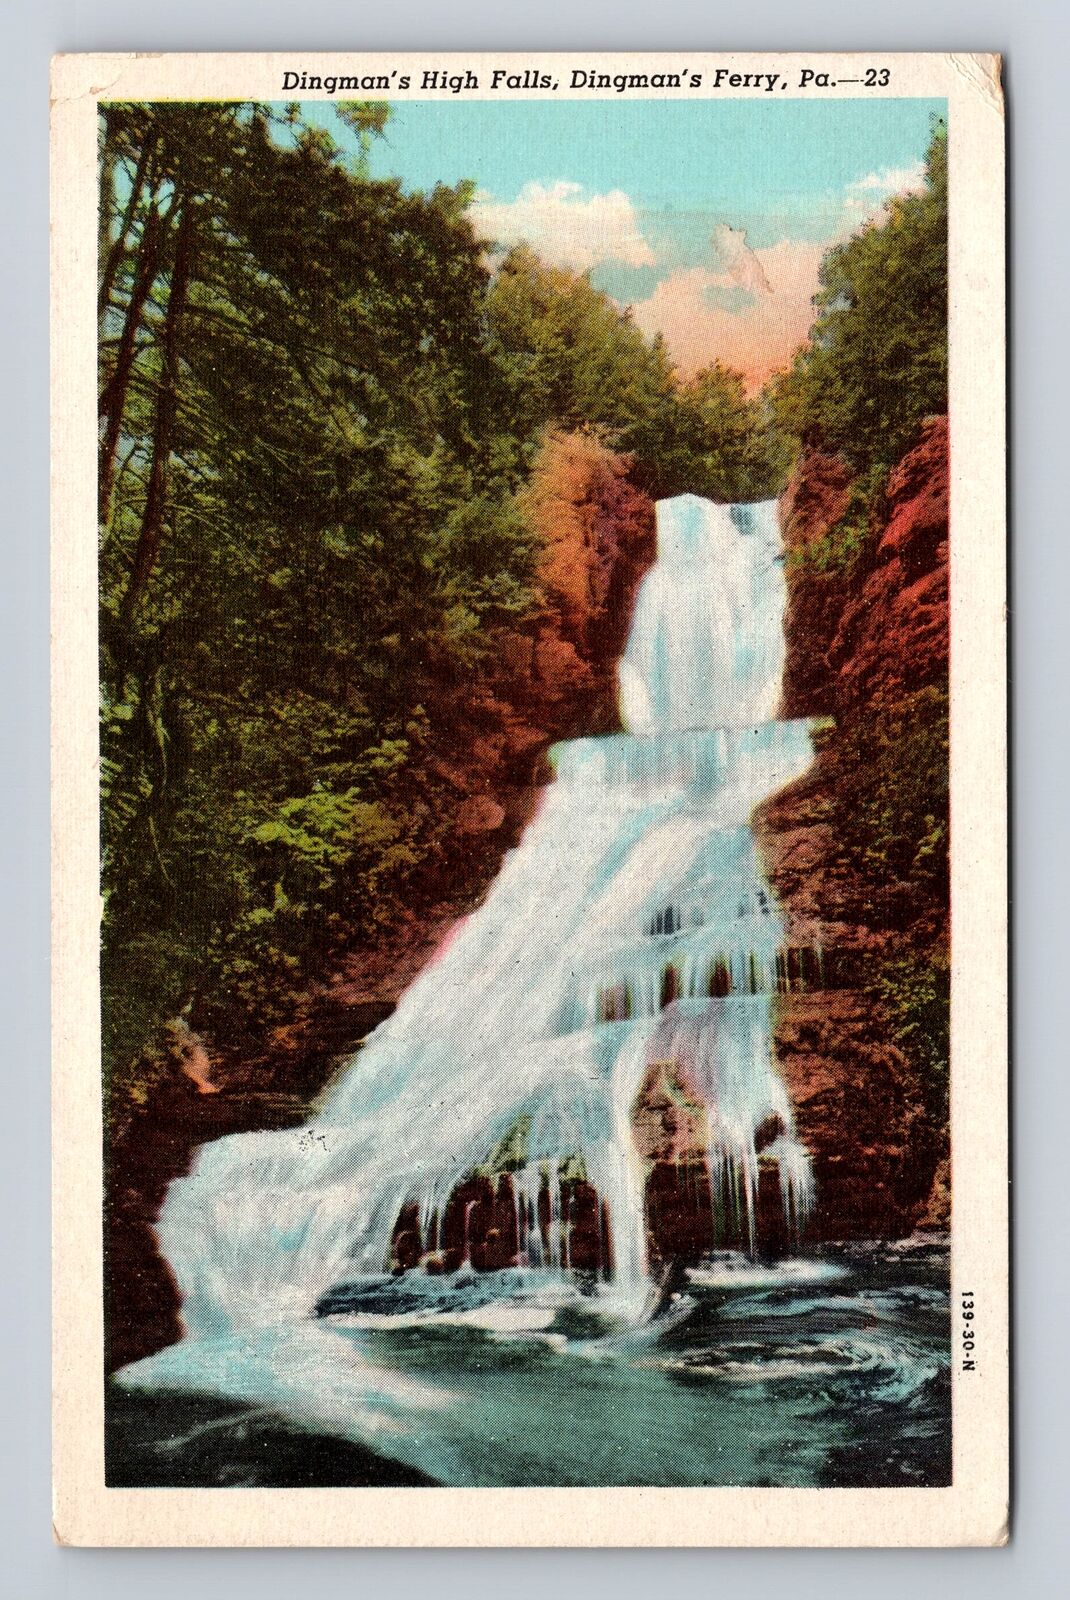 Dingman's Ferry PA- Pennsylvania, Dingman's High Falls, Antique Vintage Postcard